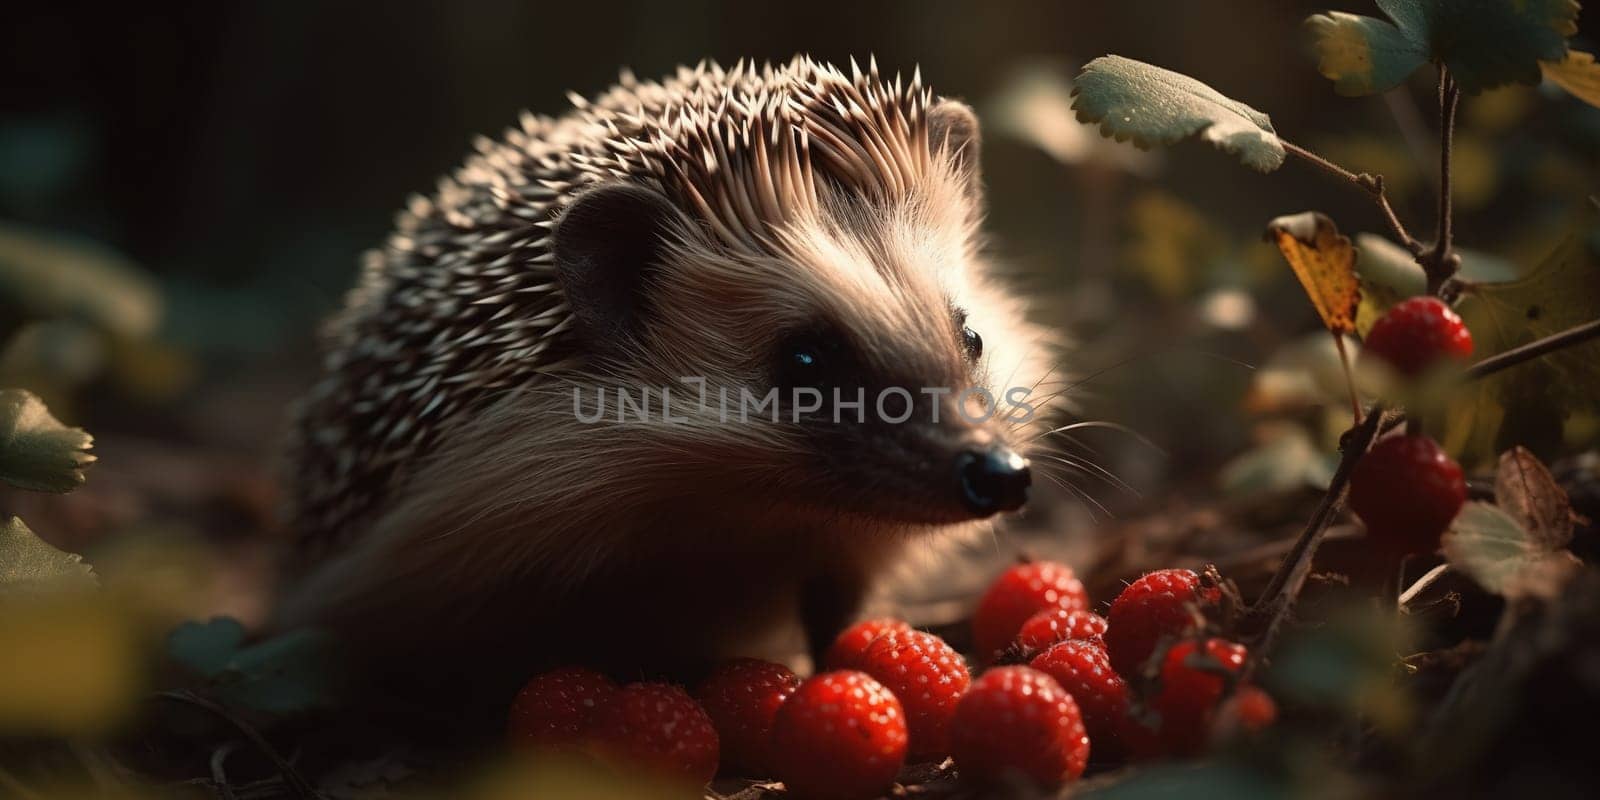 Cute Wild Hedgehog Eating Raspberry In Autumn Forest by tan4ikk1